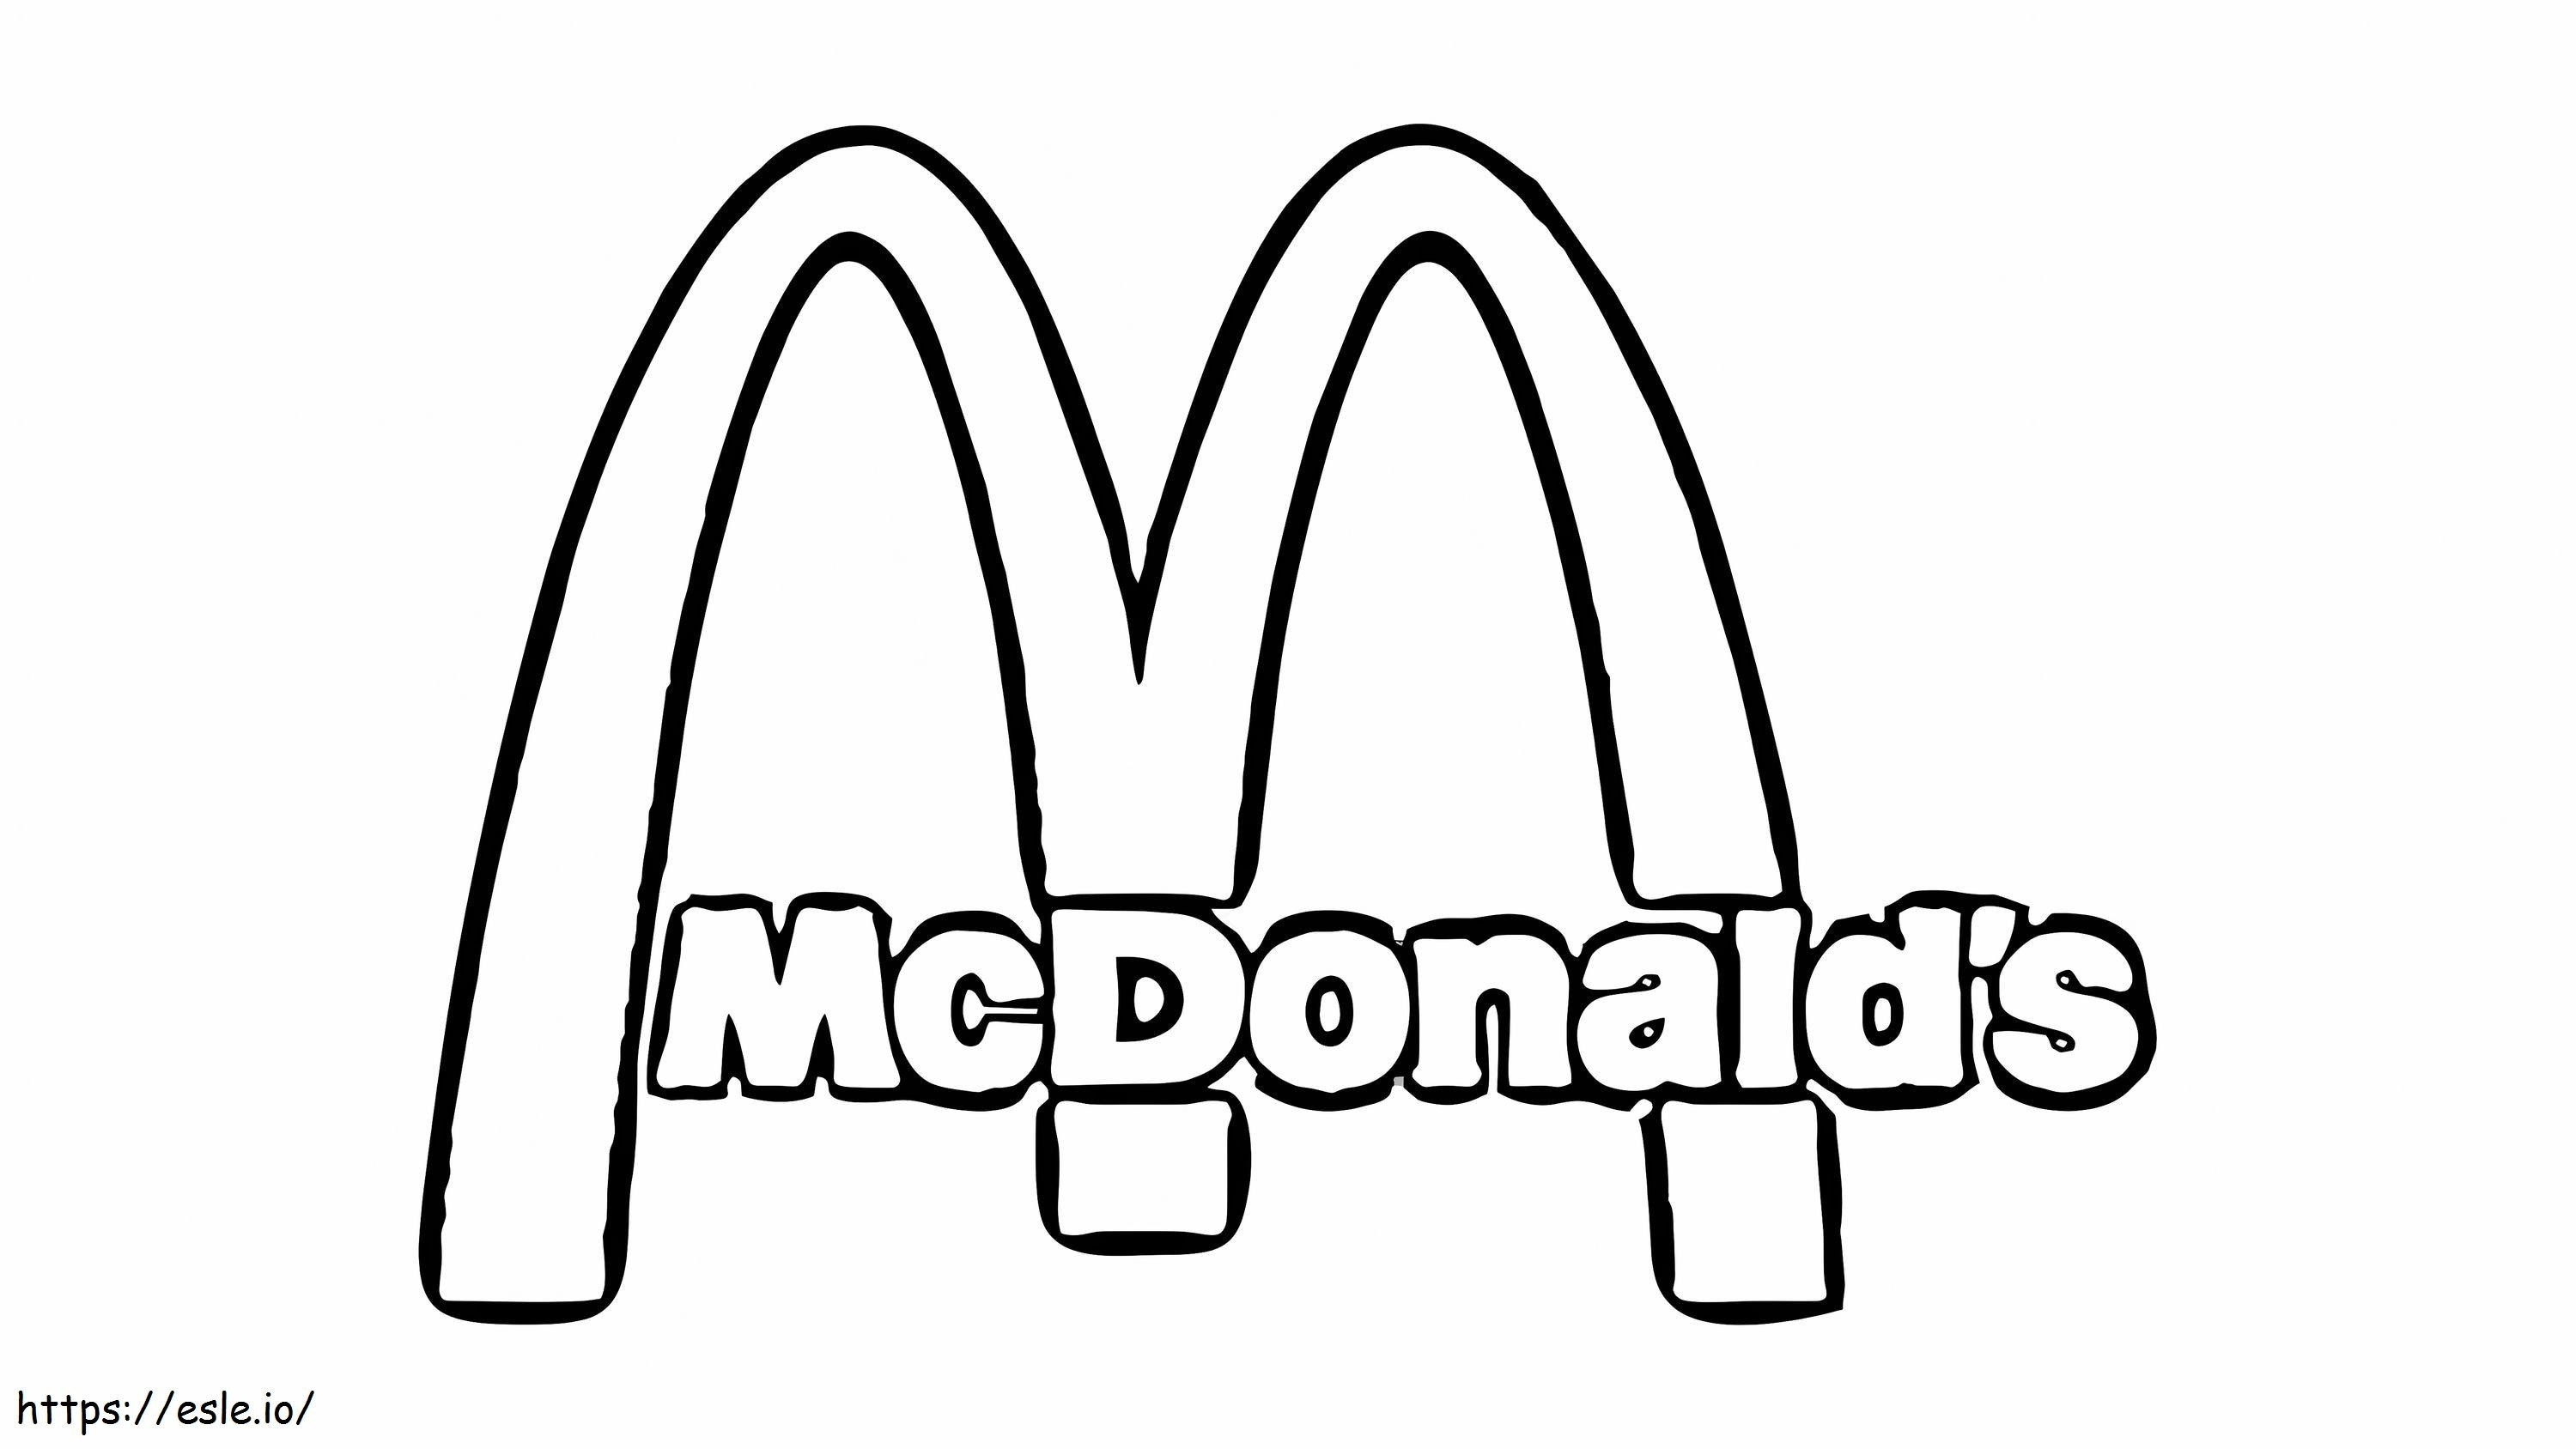 Logotipo De McDonald's para colorear